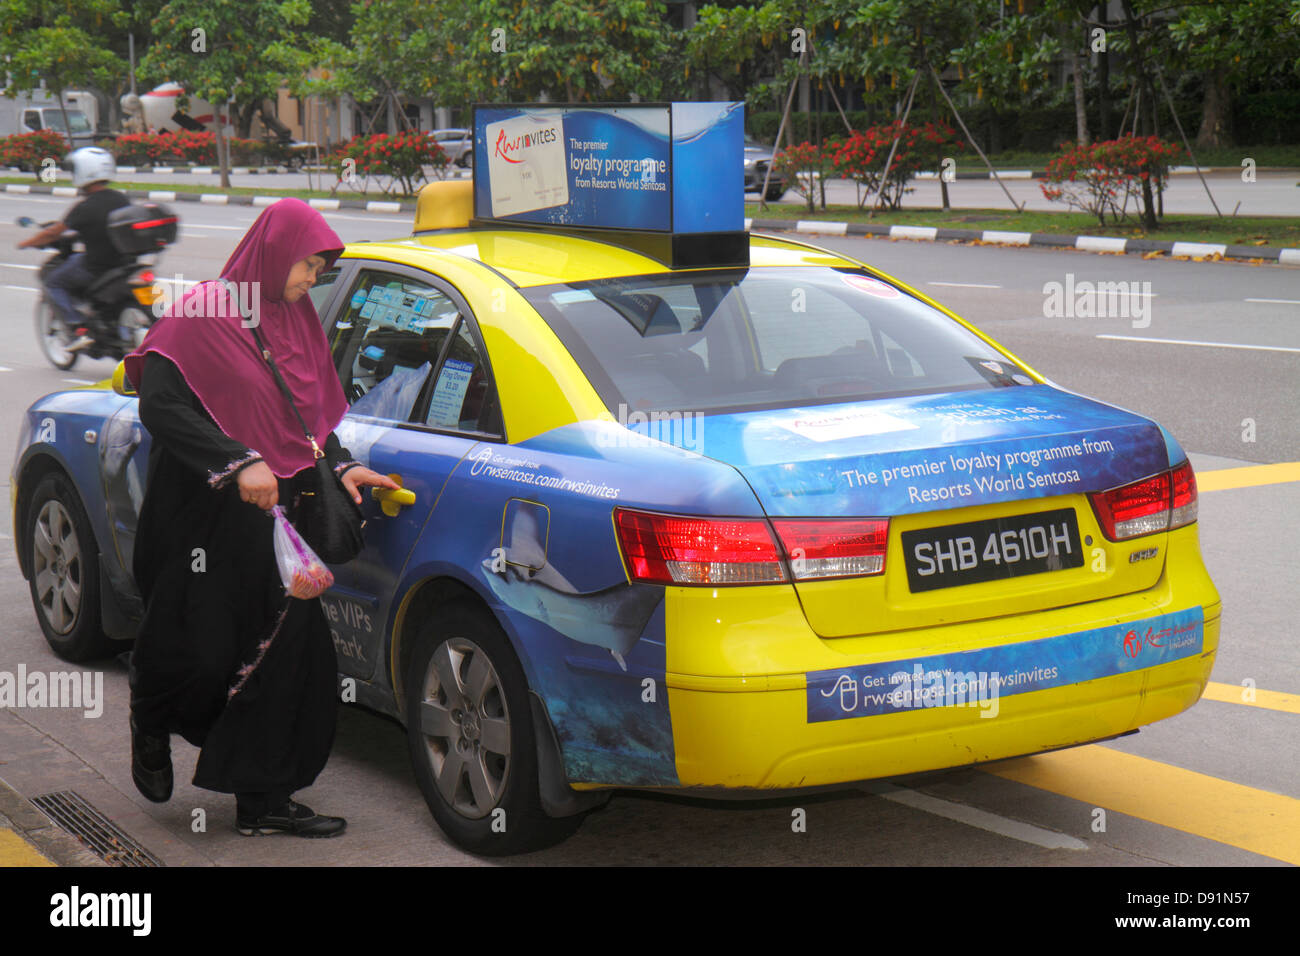 Singapore New Bridge Road,taxi cab,Asian woman female women,Muslim,getting into,hijab,Sing130204092 Stock Photo